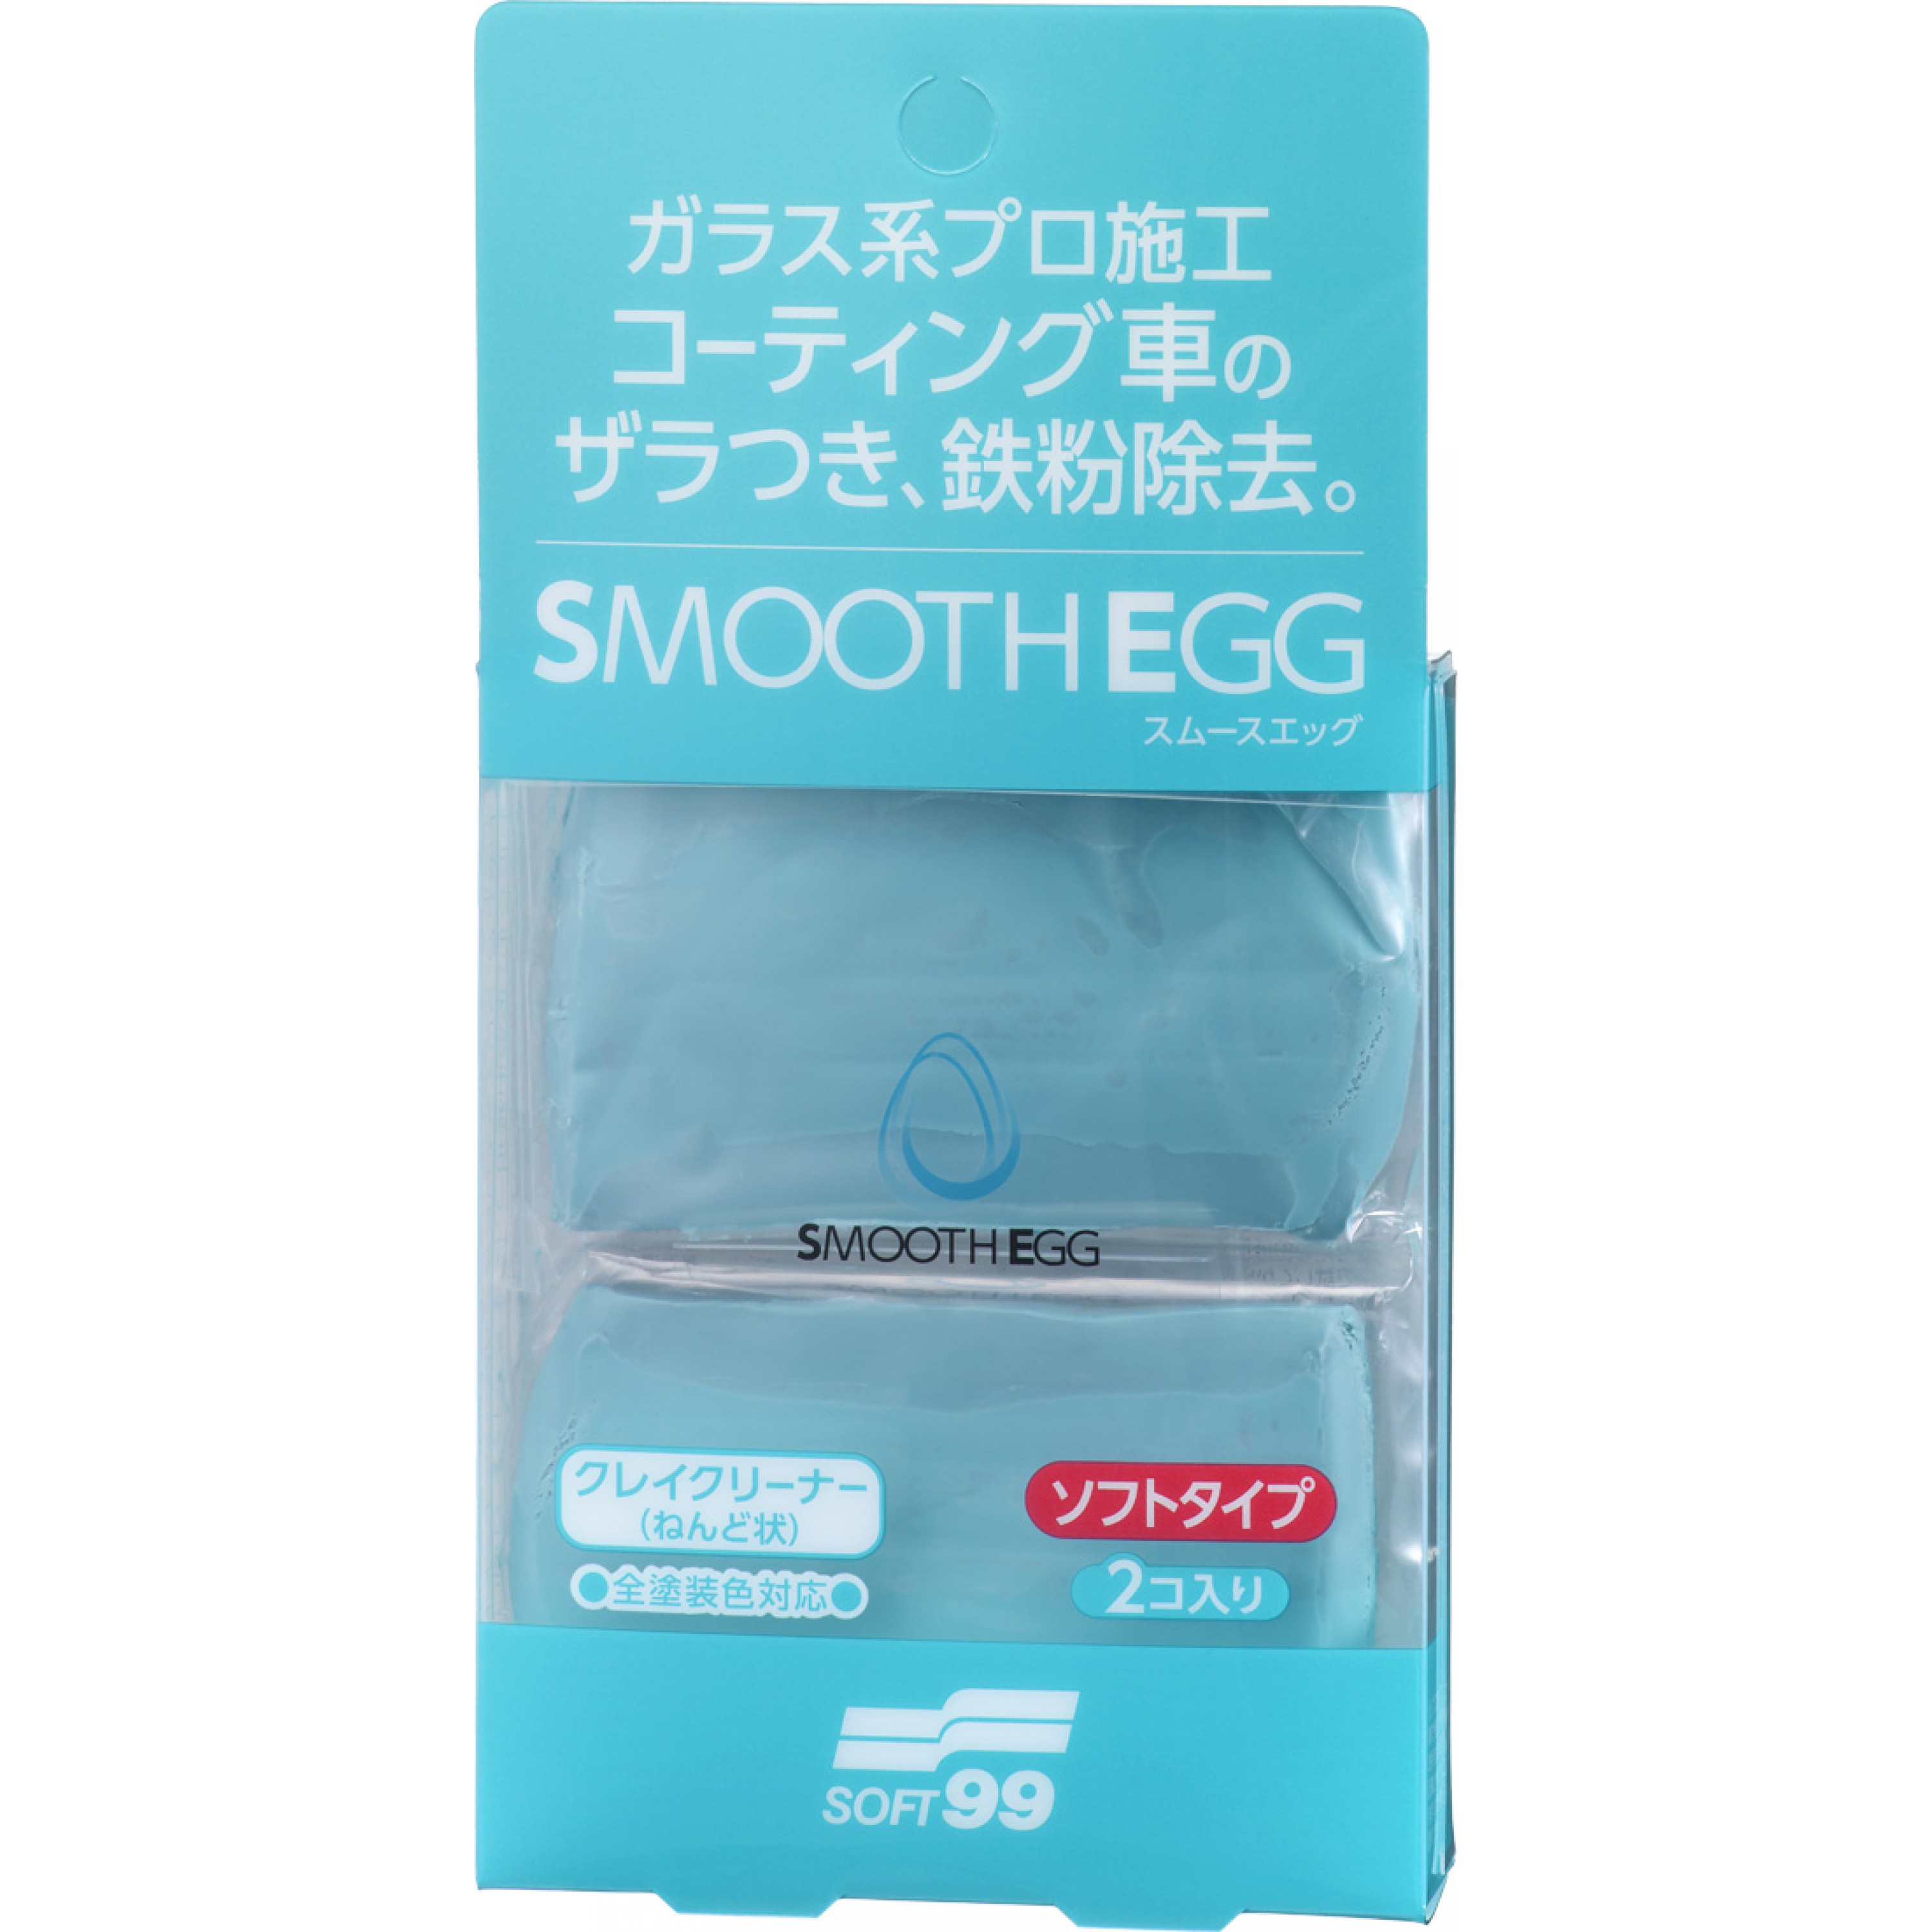 Smooth Egg Clay Bar -очиститель въевшихся загрязнений